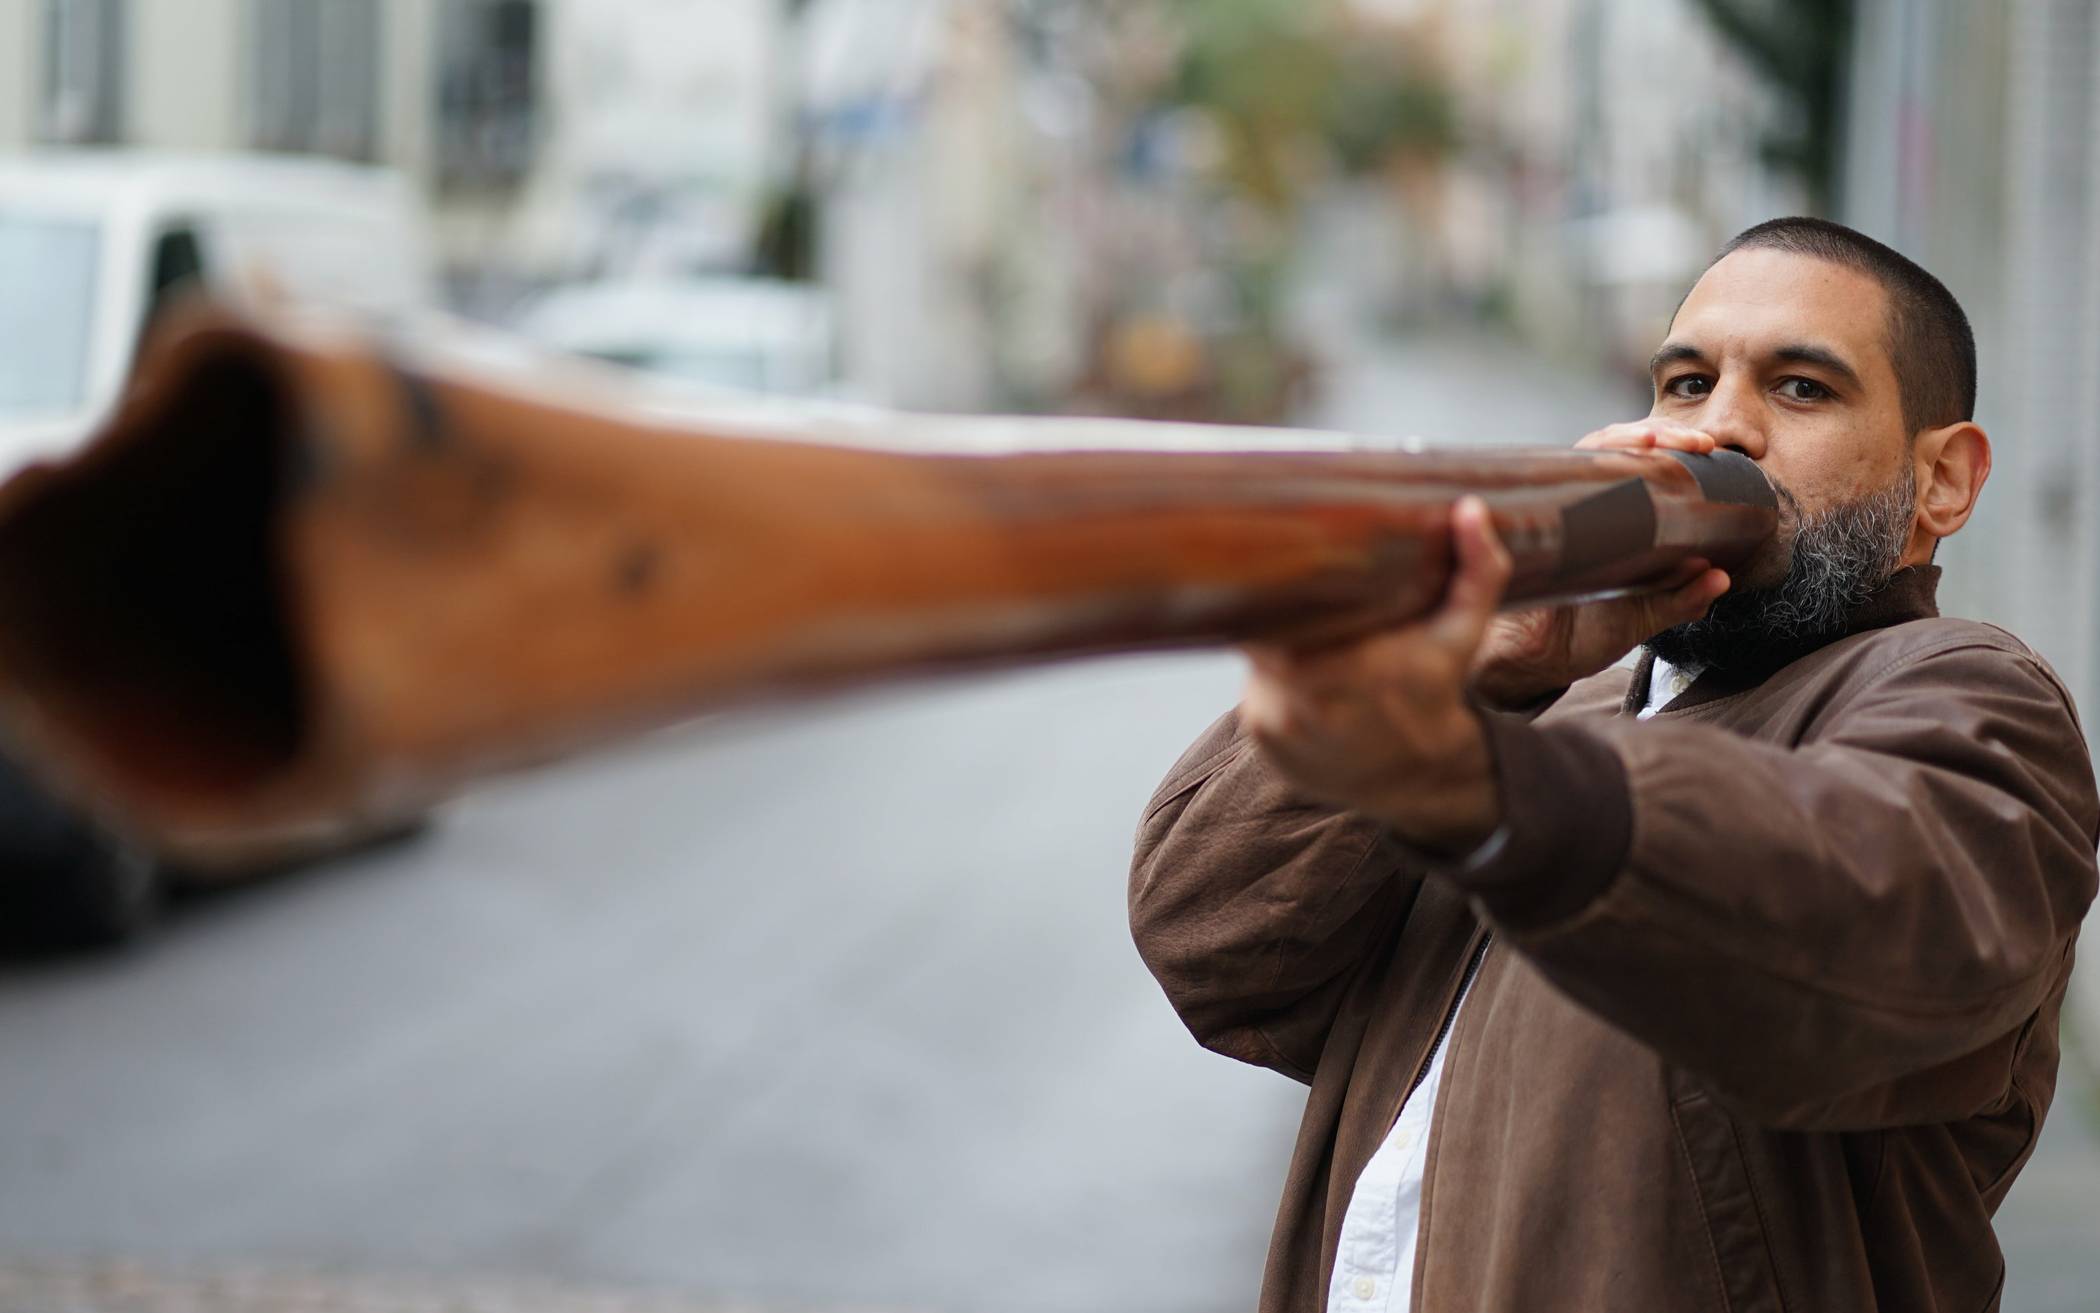  Didgeridoo-Spieler Marvin Dillmann in Aktion. 